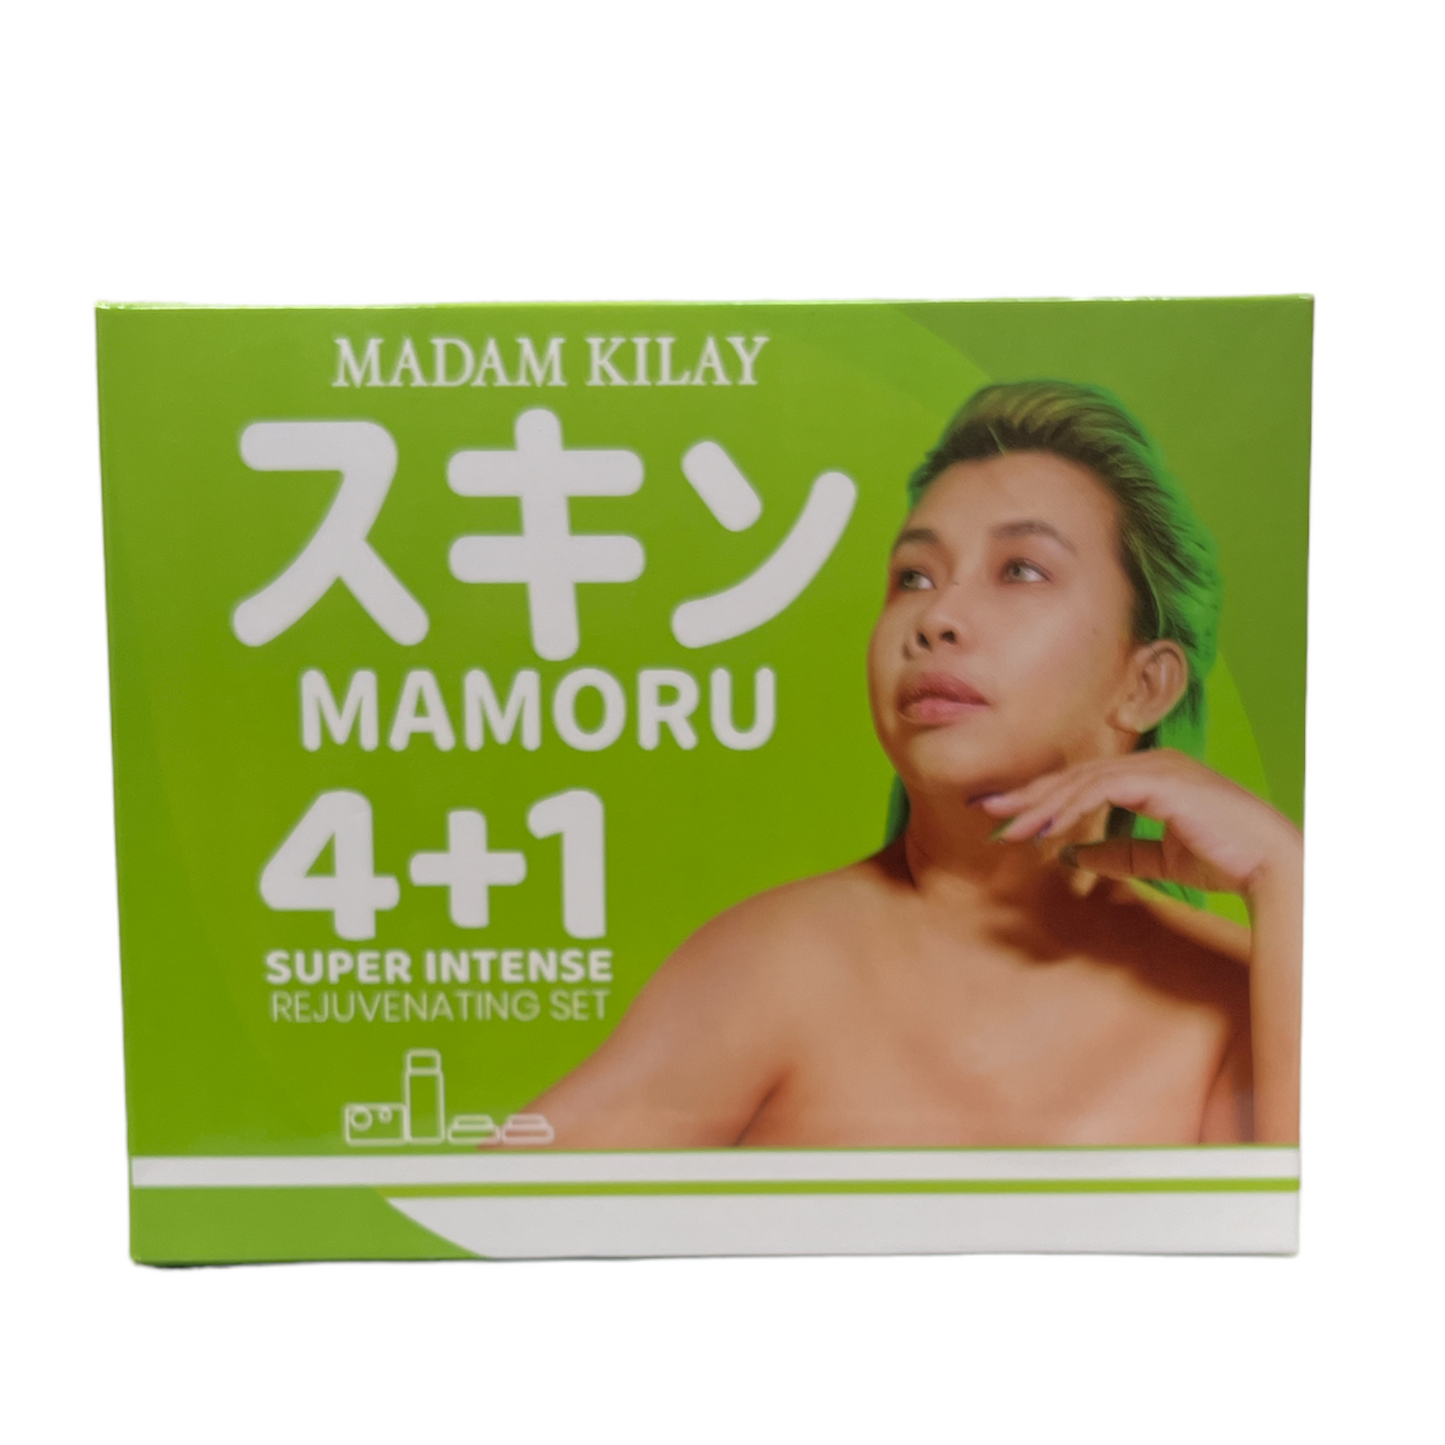 Madam Kilay Mamoru 4+ 1 Rejuvenating Set